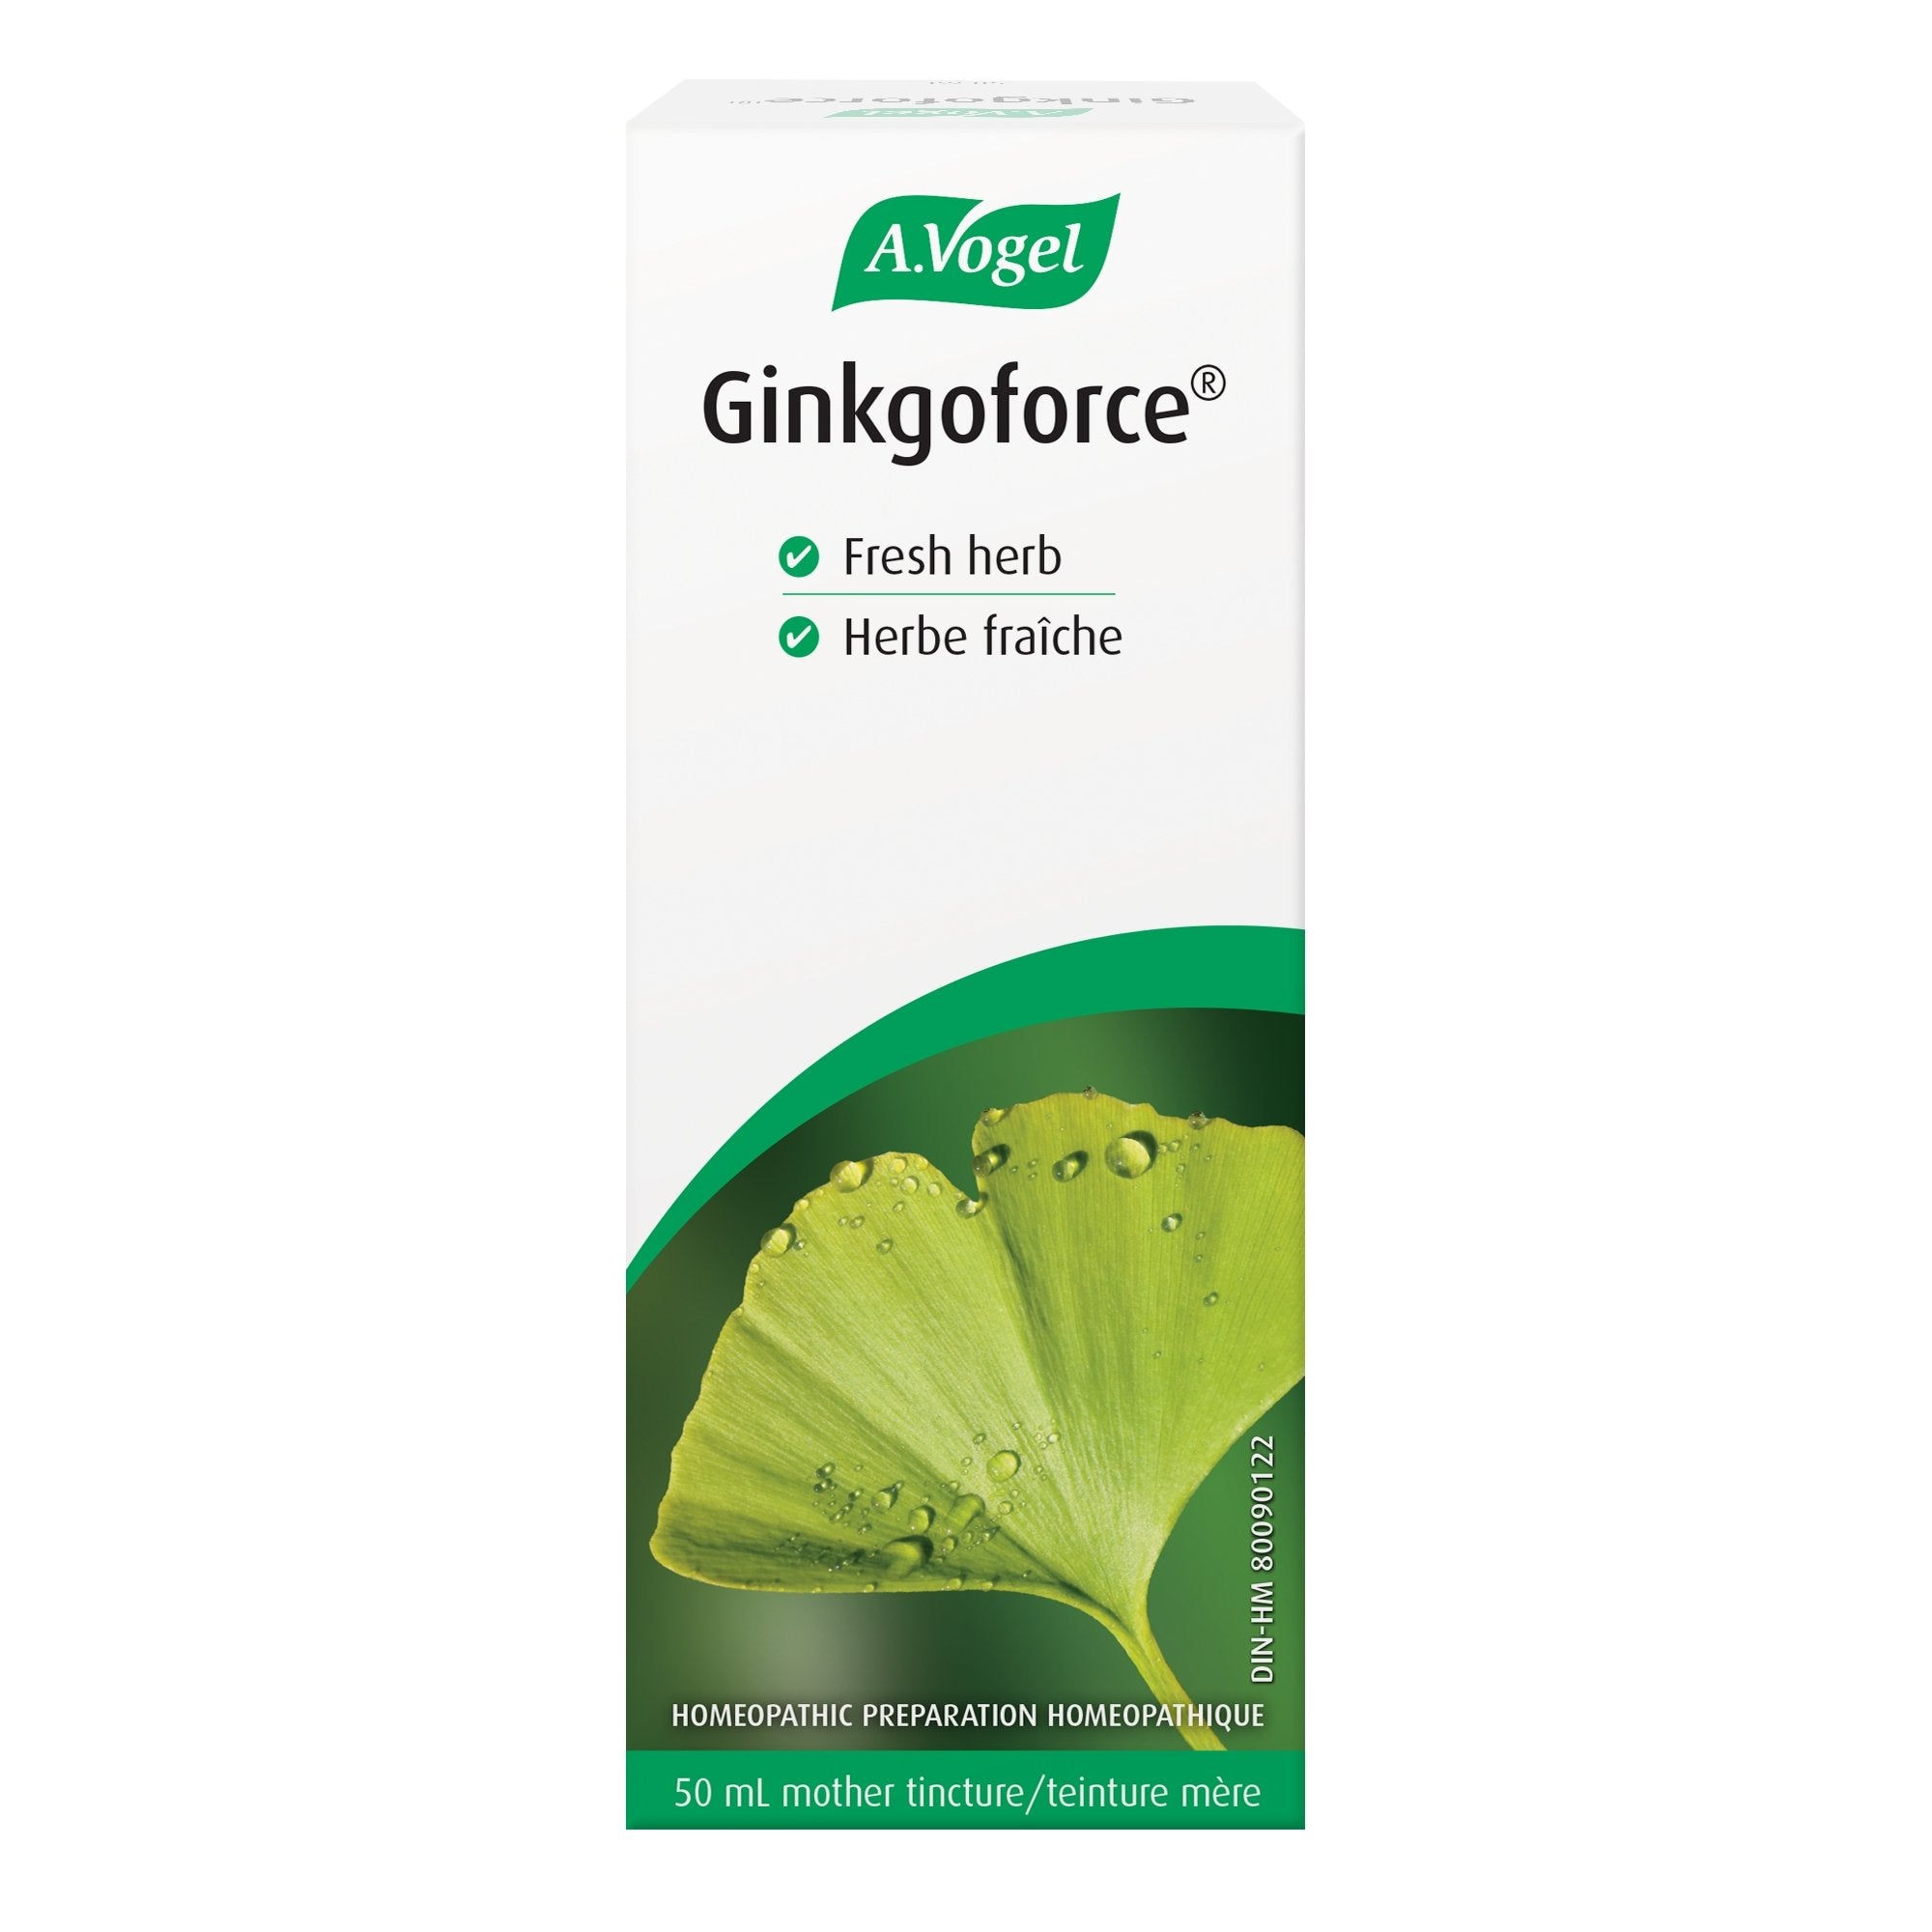 Ginkgoforce - Ginkgo Biloba Extract 50mL - A.Vogel Canada